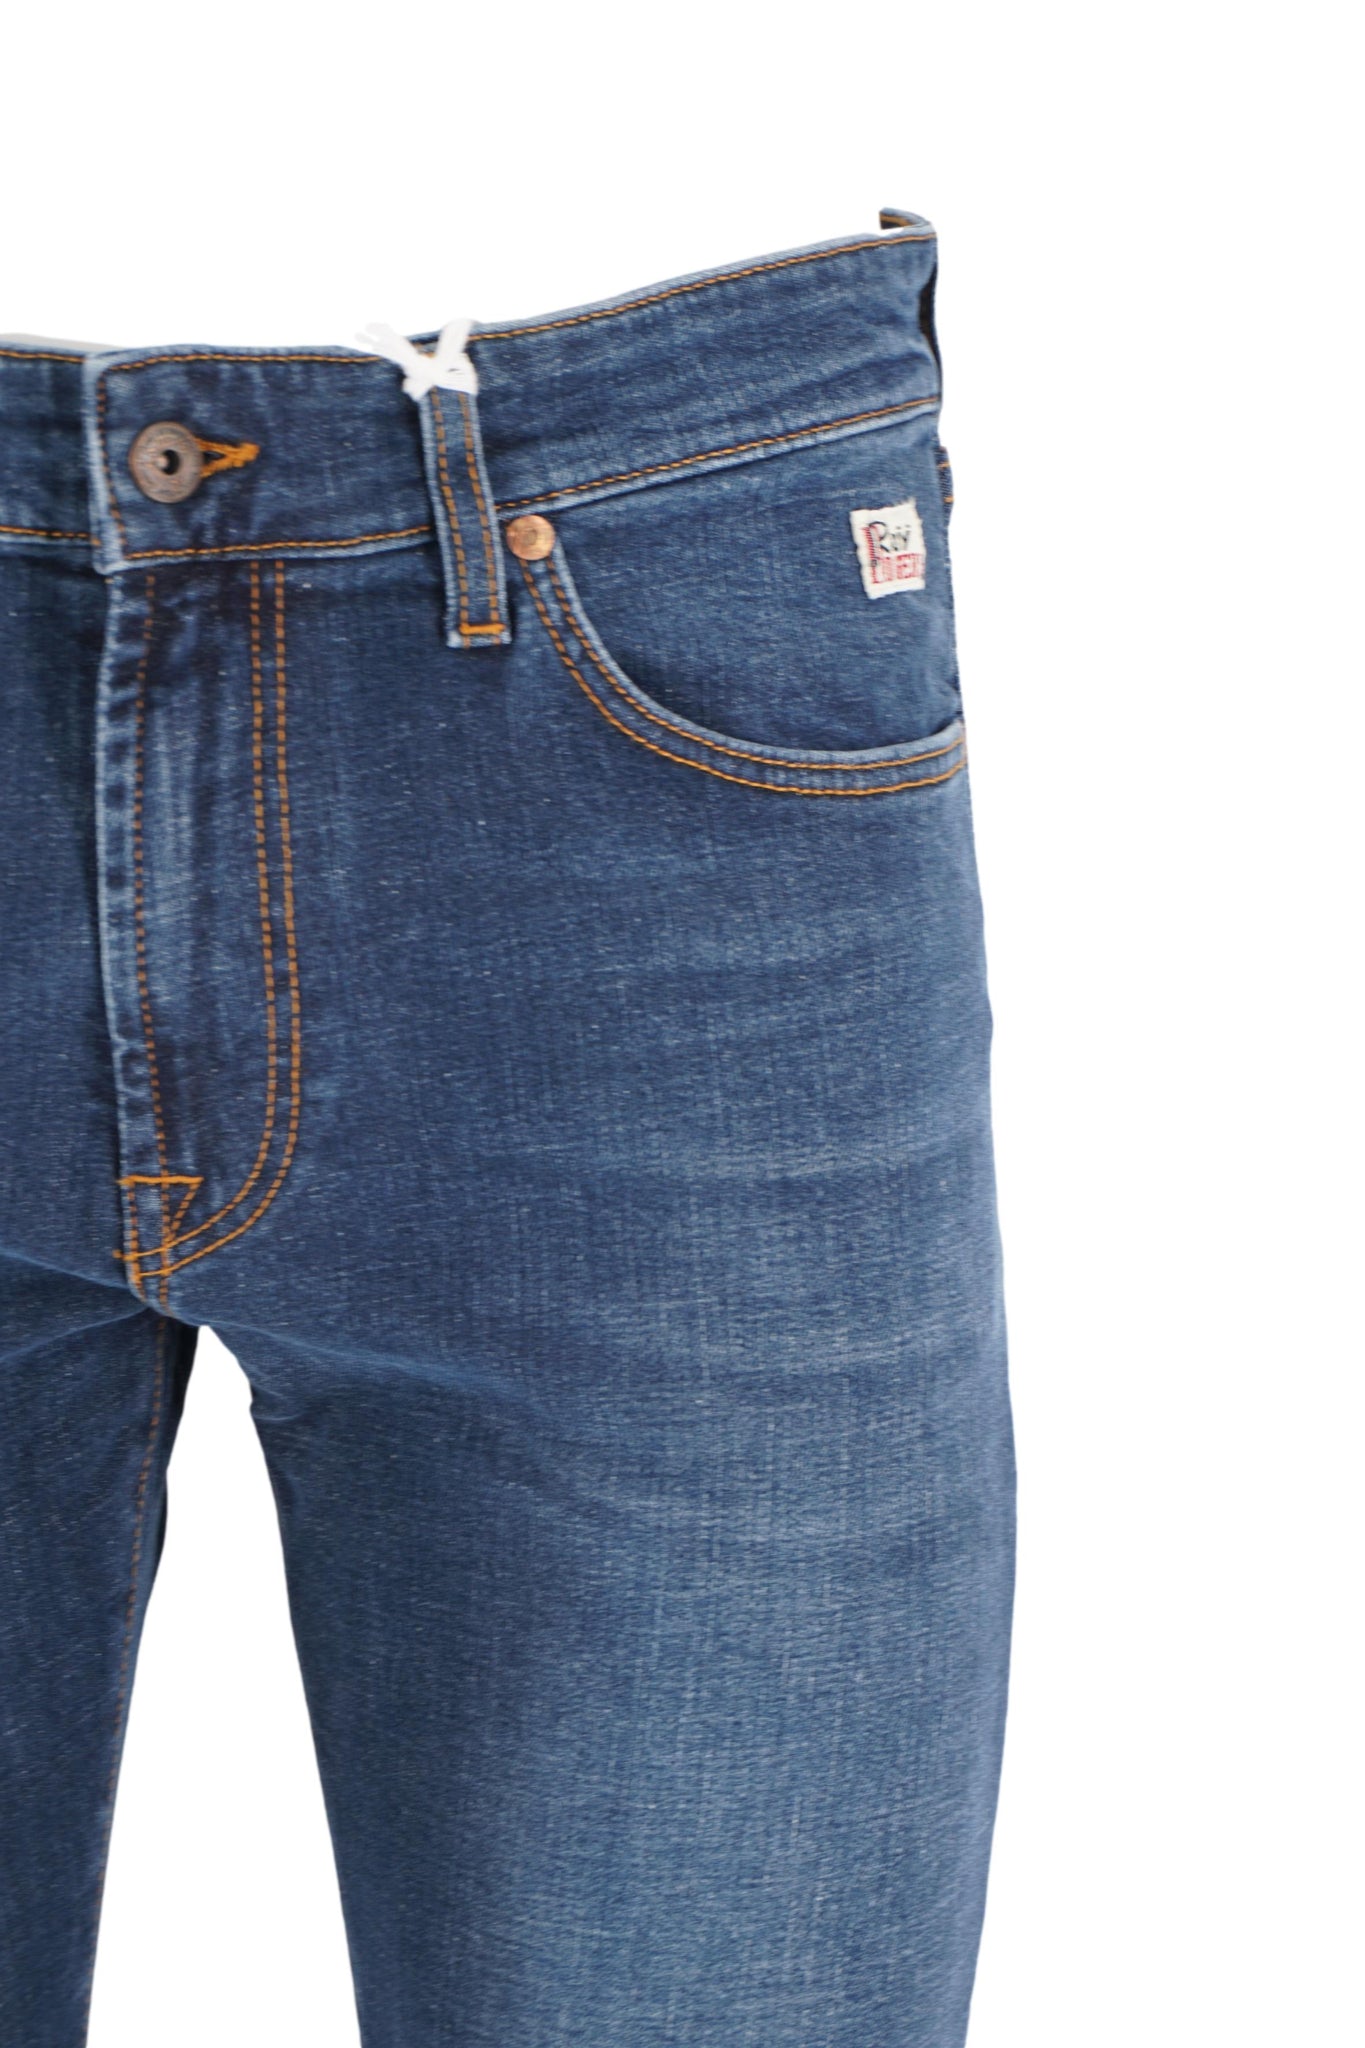 Jeans 517 Cinque Tasche / Jeans - Ideal Moda